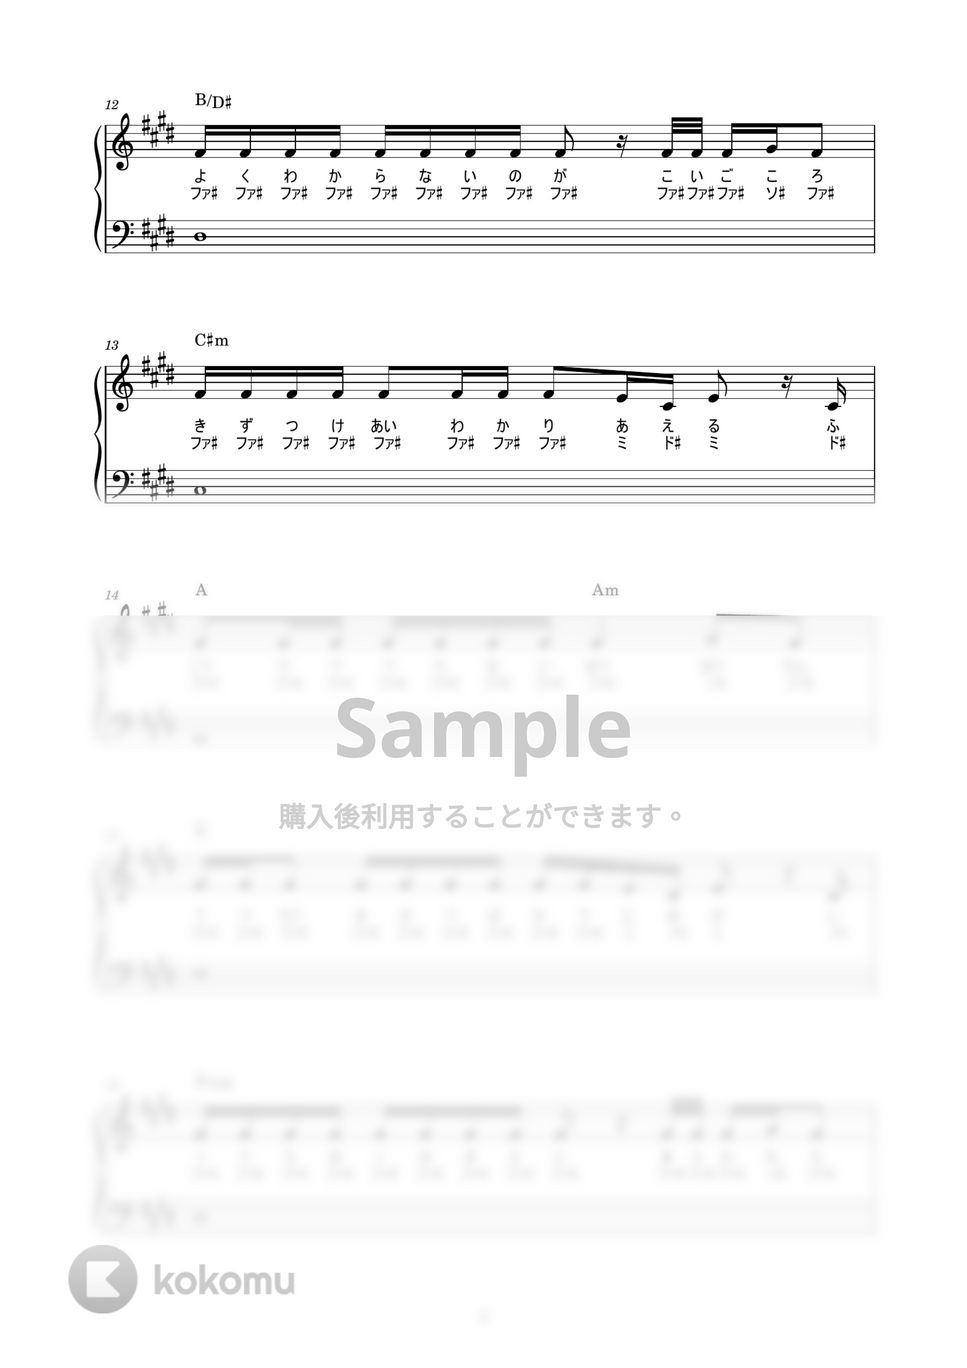 Kis-My-Ft2 - LUV BIAS (かんたん / 歌詞付き / ドレミ付き / 初心者) by piano.tokyo